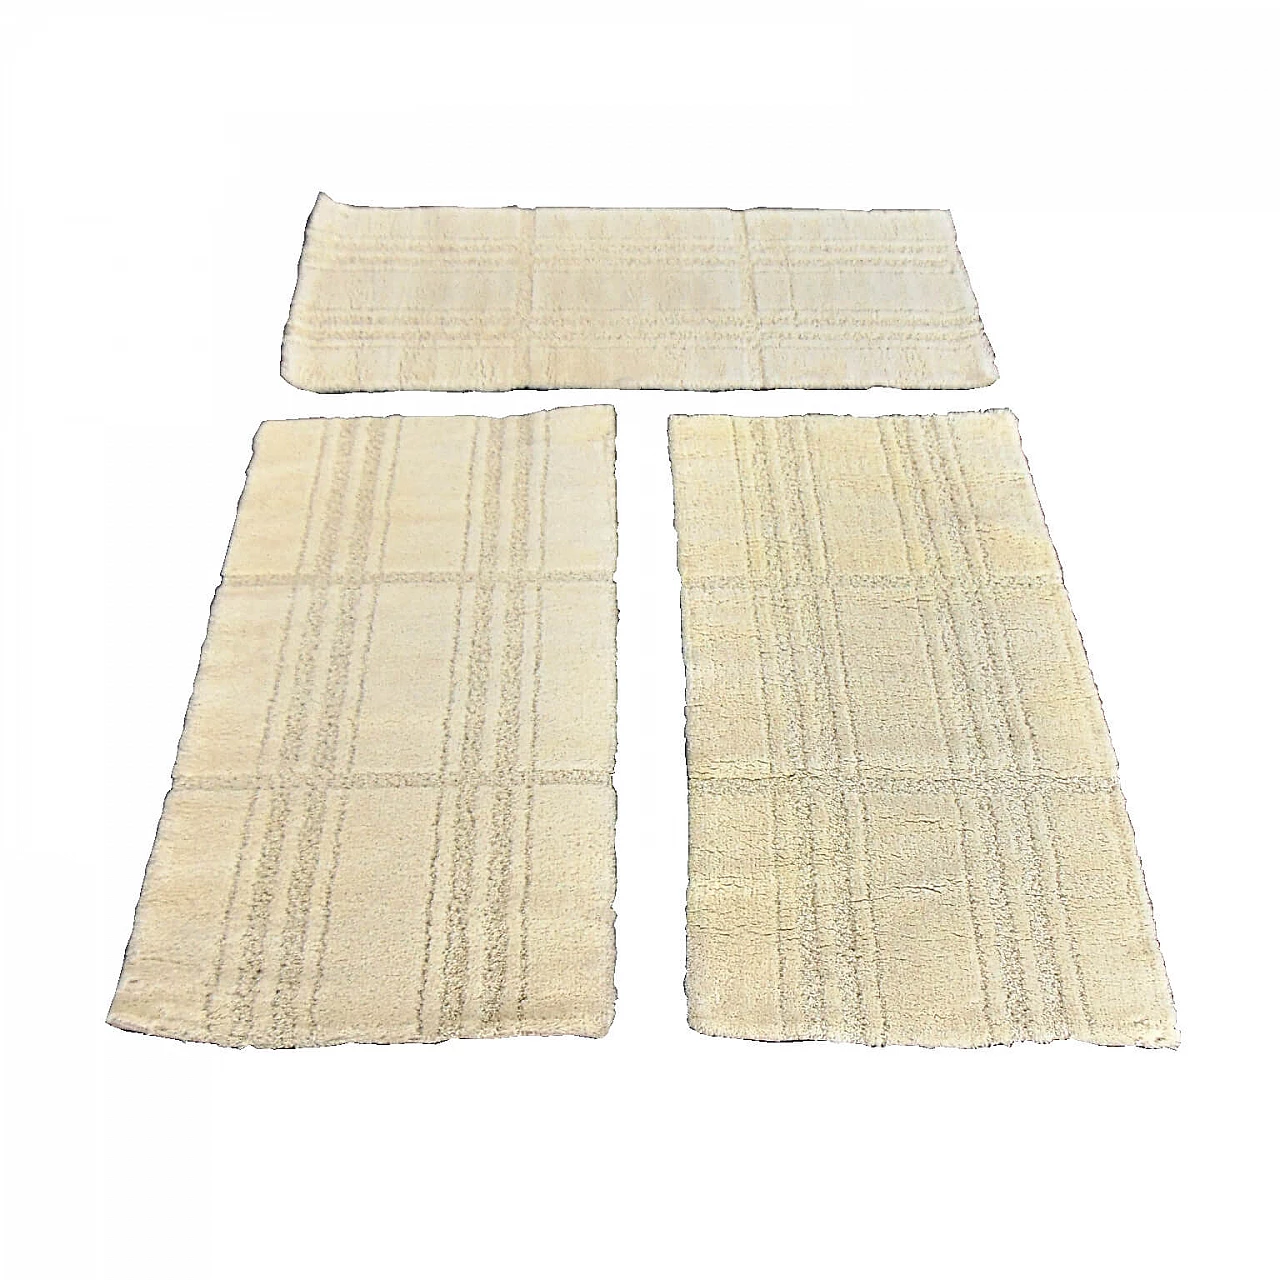 3 Tappeti danesi in pura lana vergine, tonalità crema, Eksport Hojer, anni '70 1070232